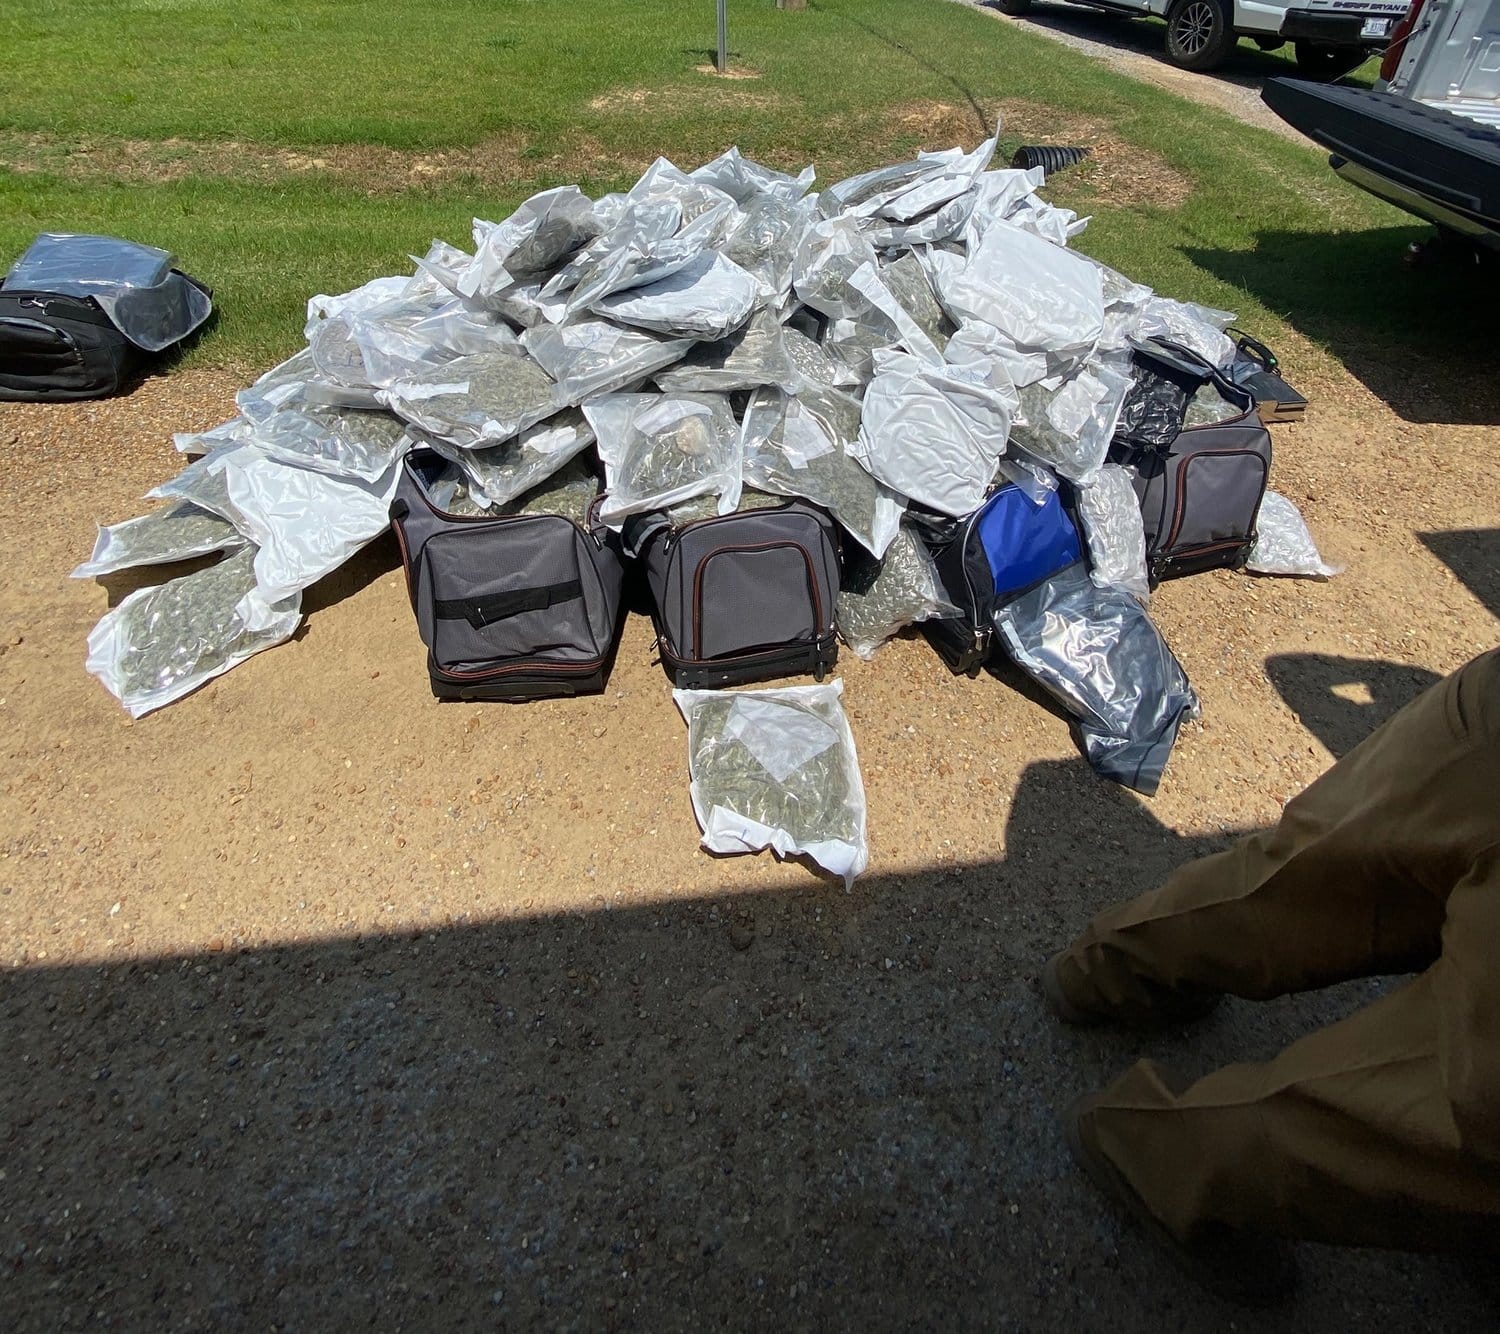 400 pounds of pot seized by police